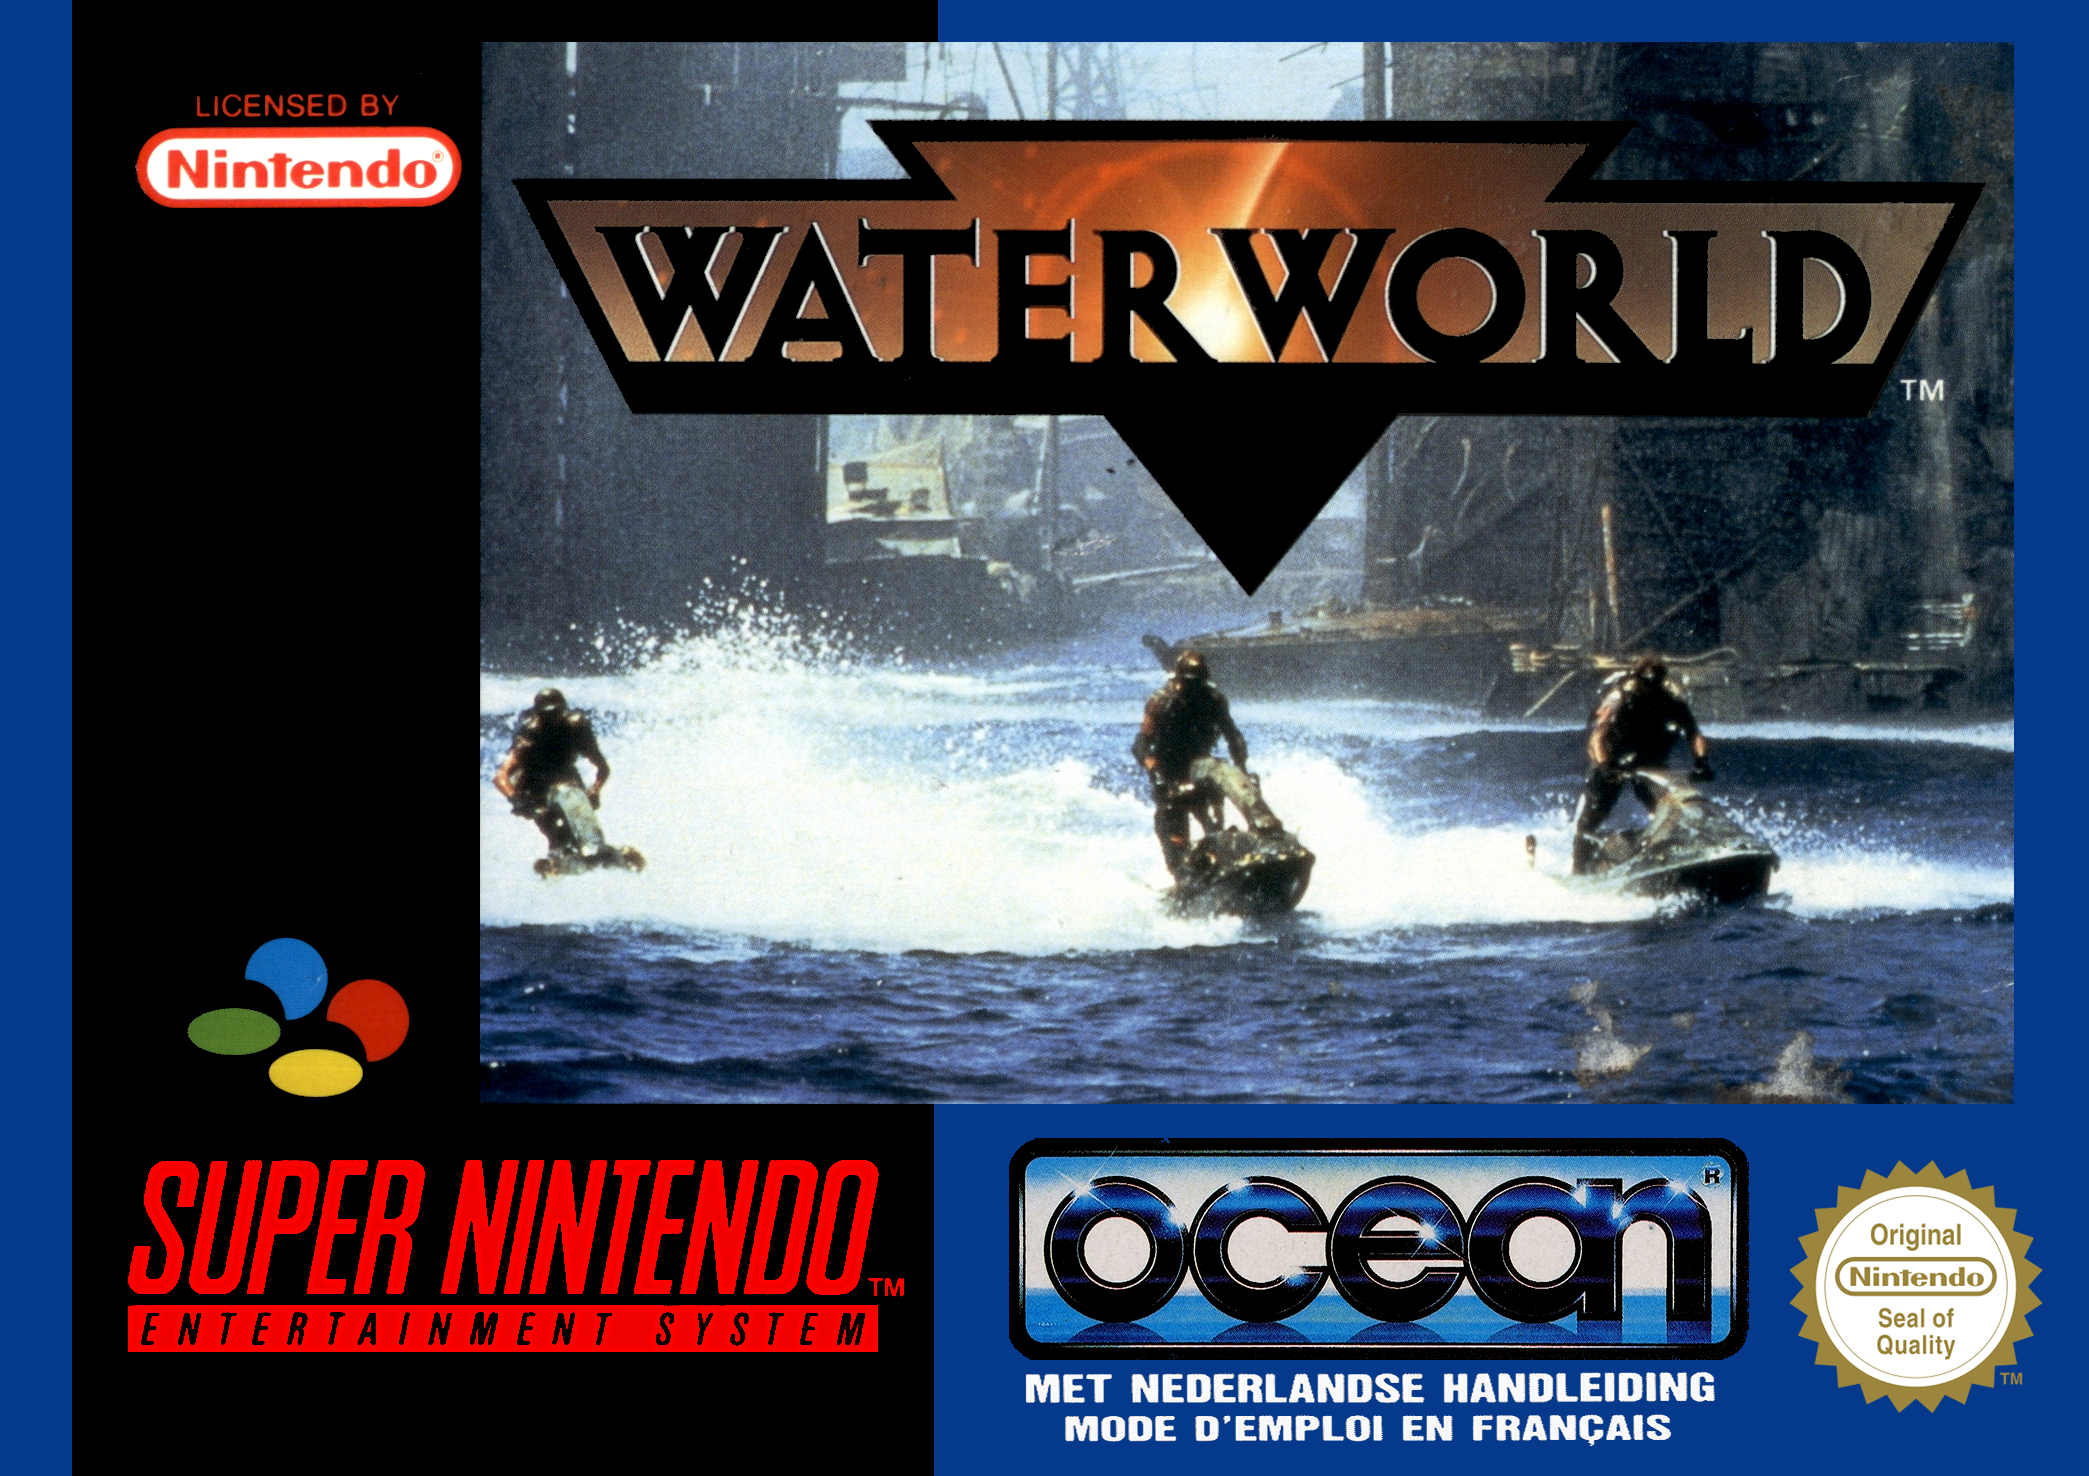 Waterworld игра. Ватер ворлд супер Нинтендо. Waterworld game boy. Waterworld (Europe) (Proto)игра. Игра ватер ворлд